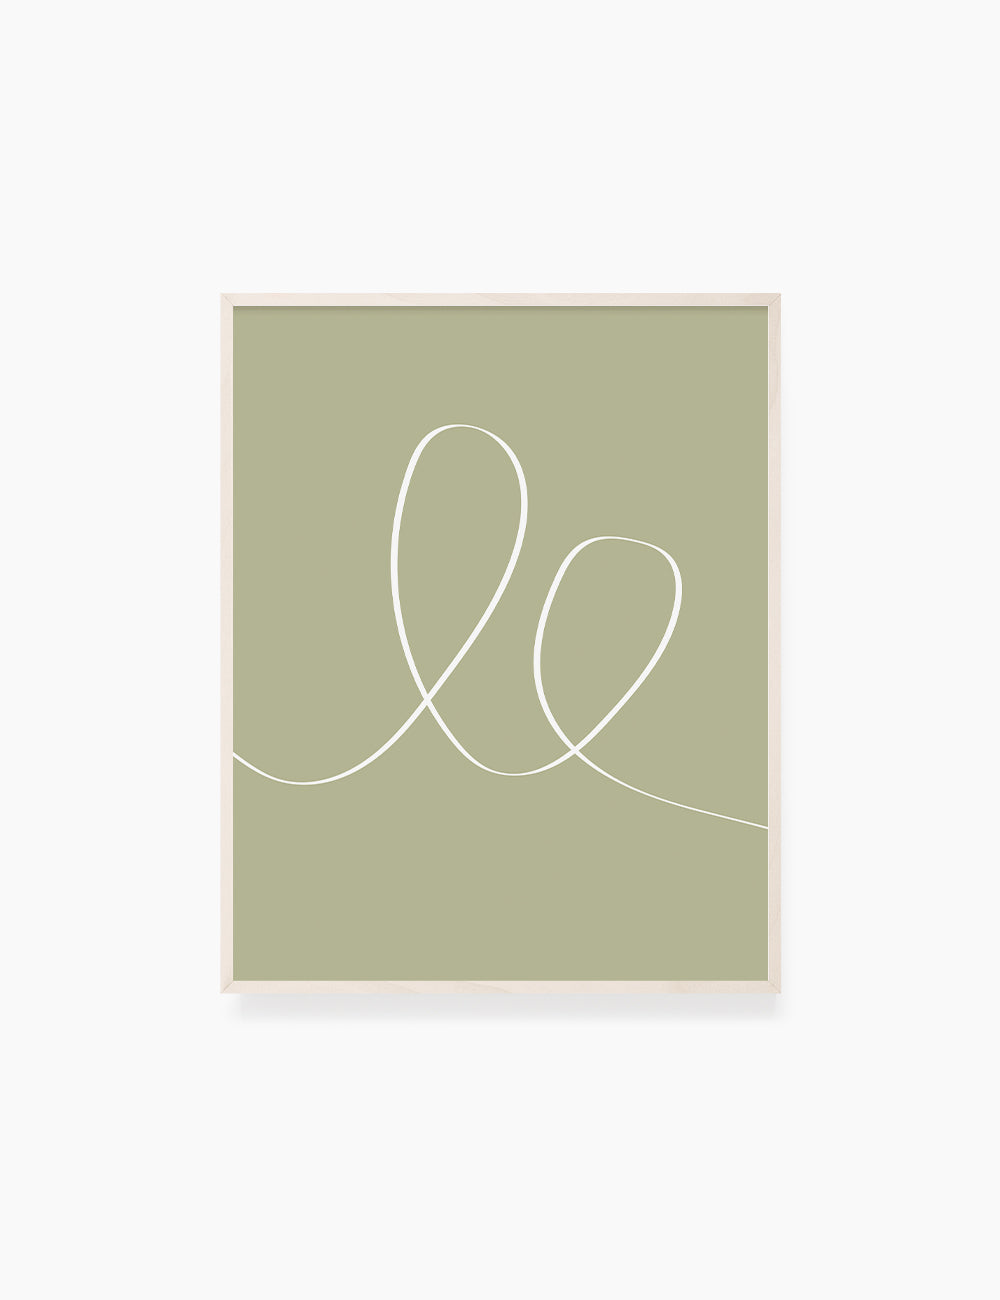 MINIMAL LINE ART. Abstract Heart Shape. Boho. Green. Printable Wall Art Illustration. - PAPER MOON Art & Design